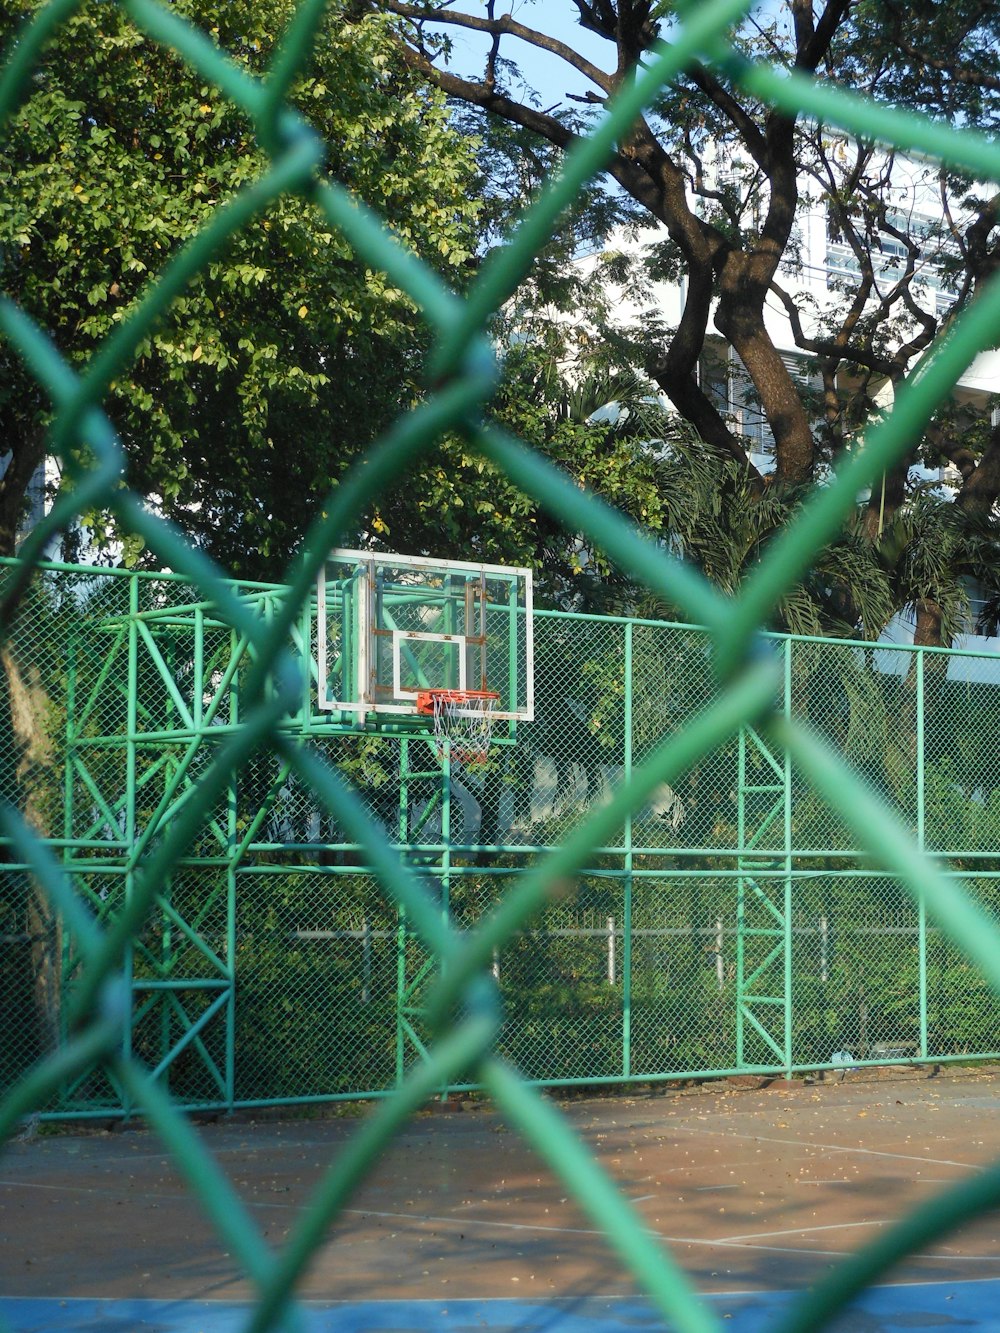 a basketball court through a chain link fence